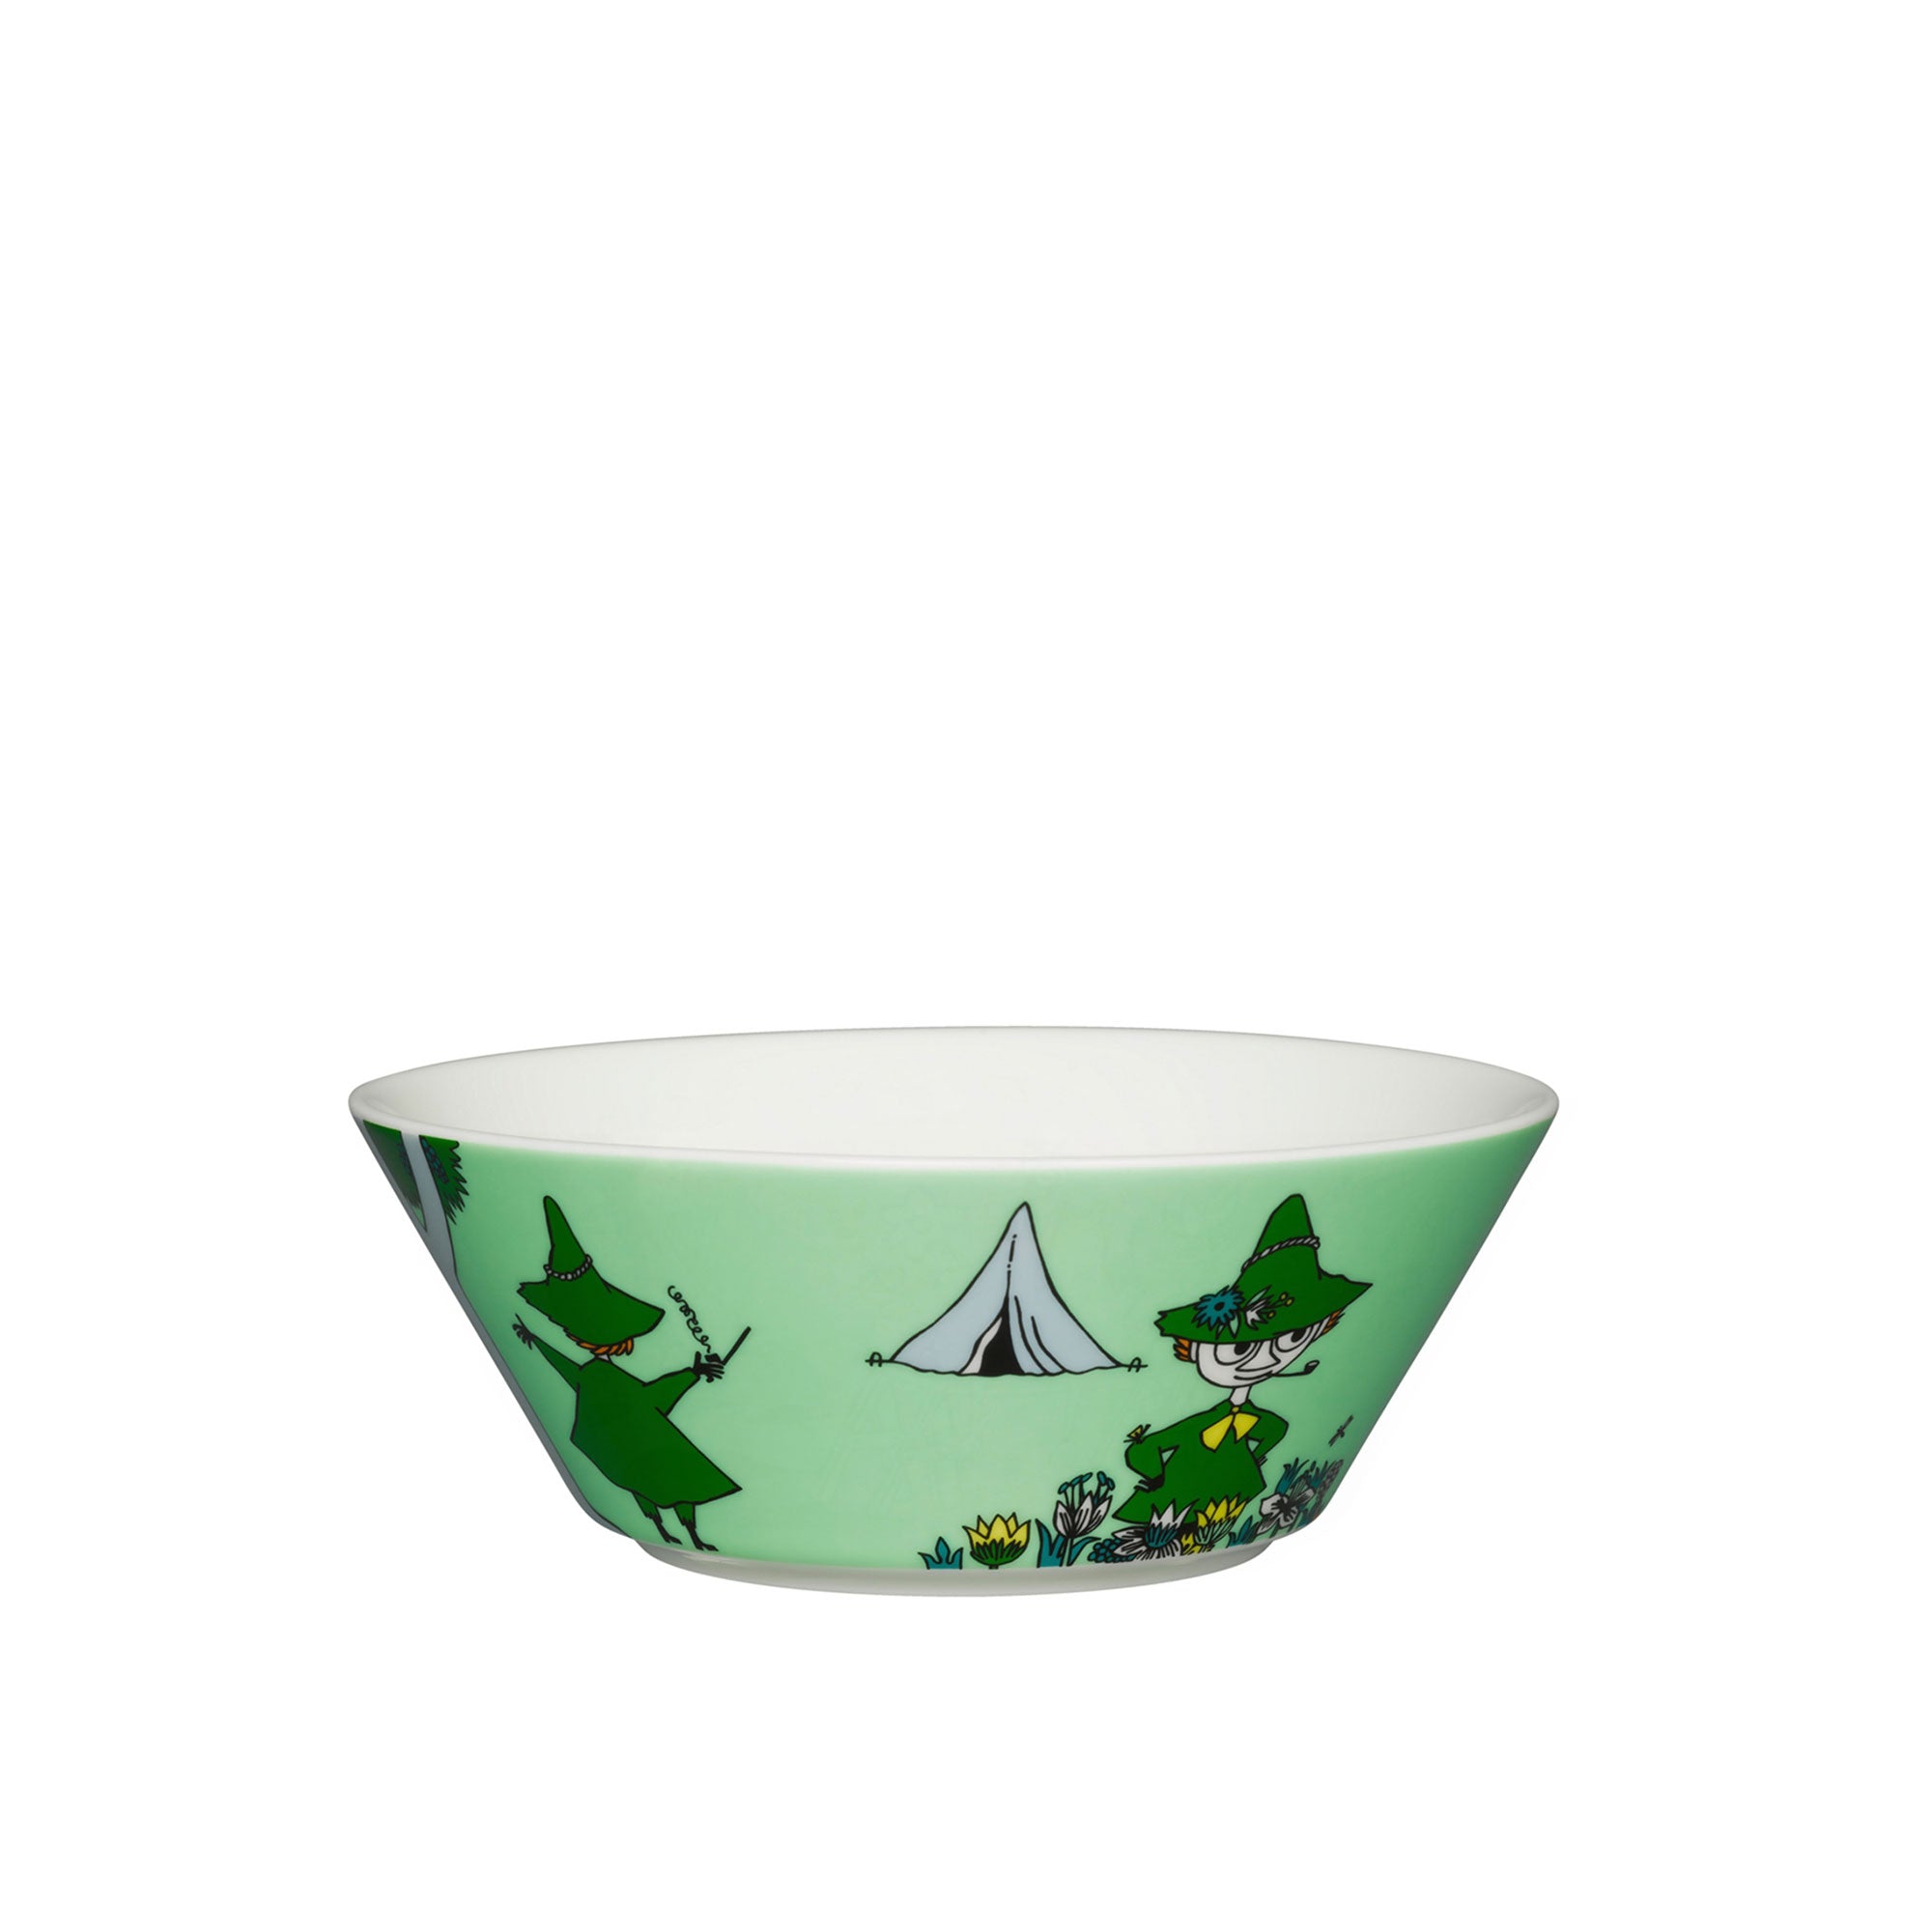 Snufkin Green Moomin Bowl